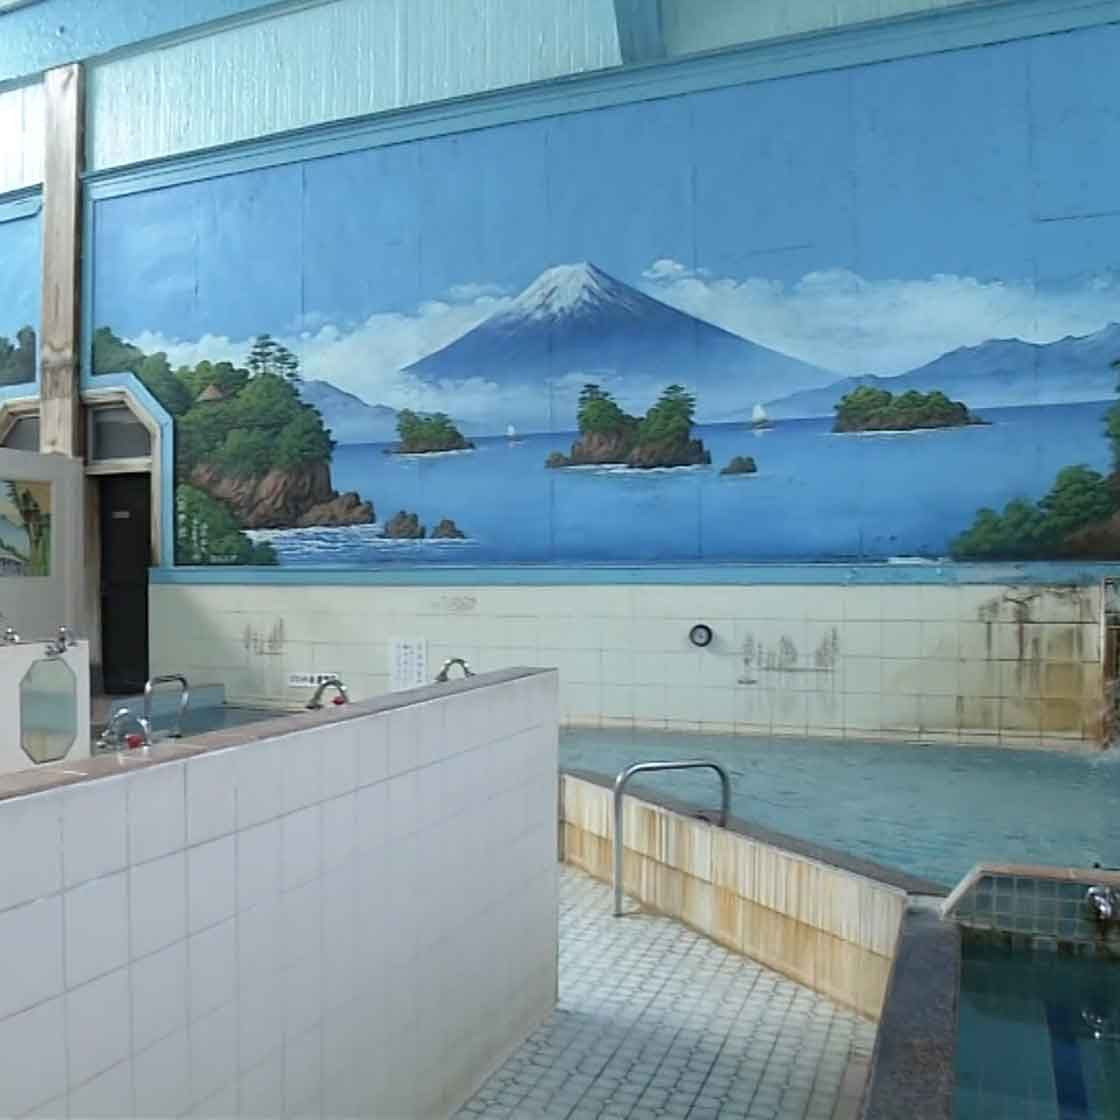 Public bathhouses revamped for modern Japan